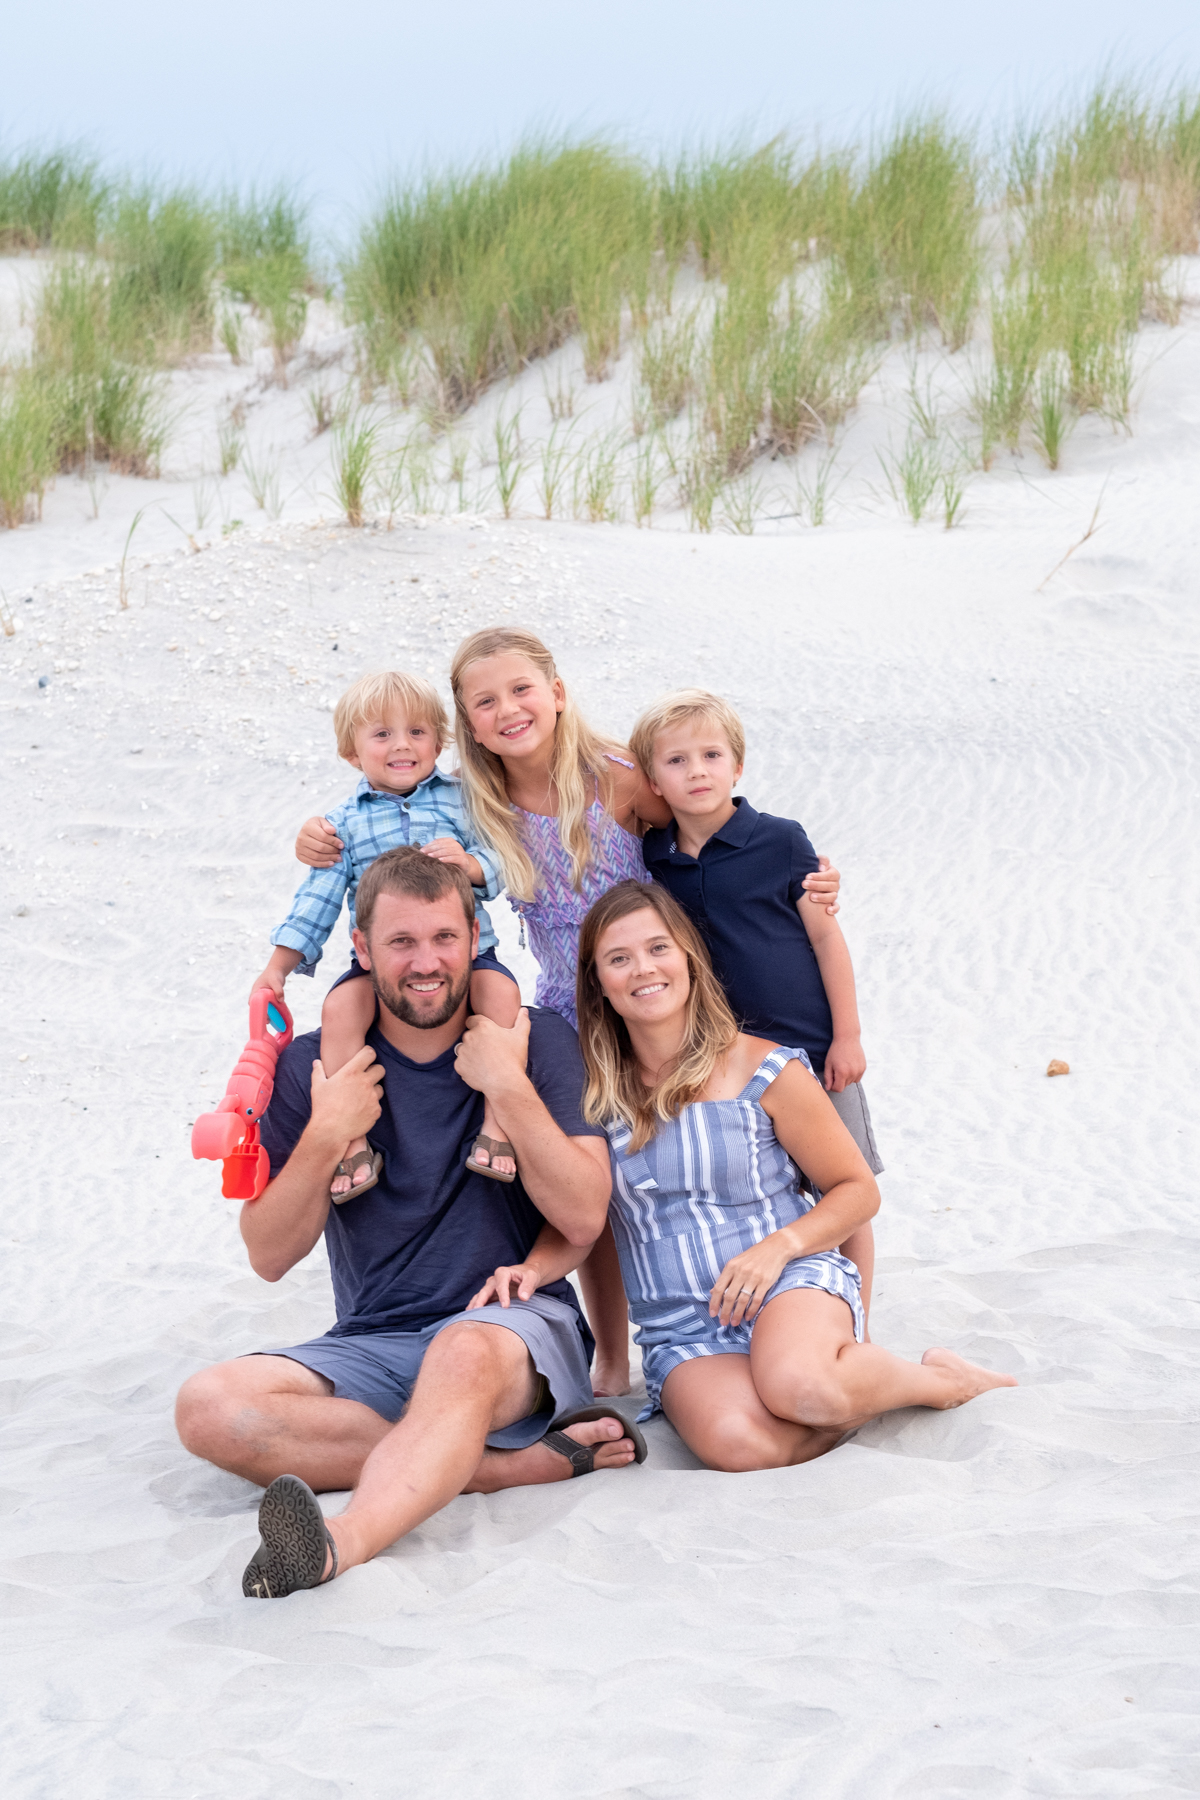 Family Group Beach Portrait